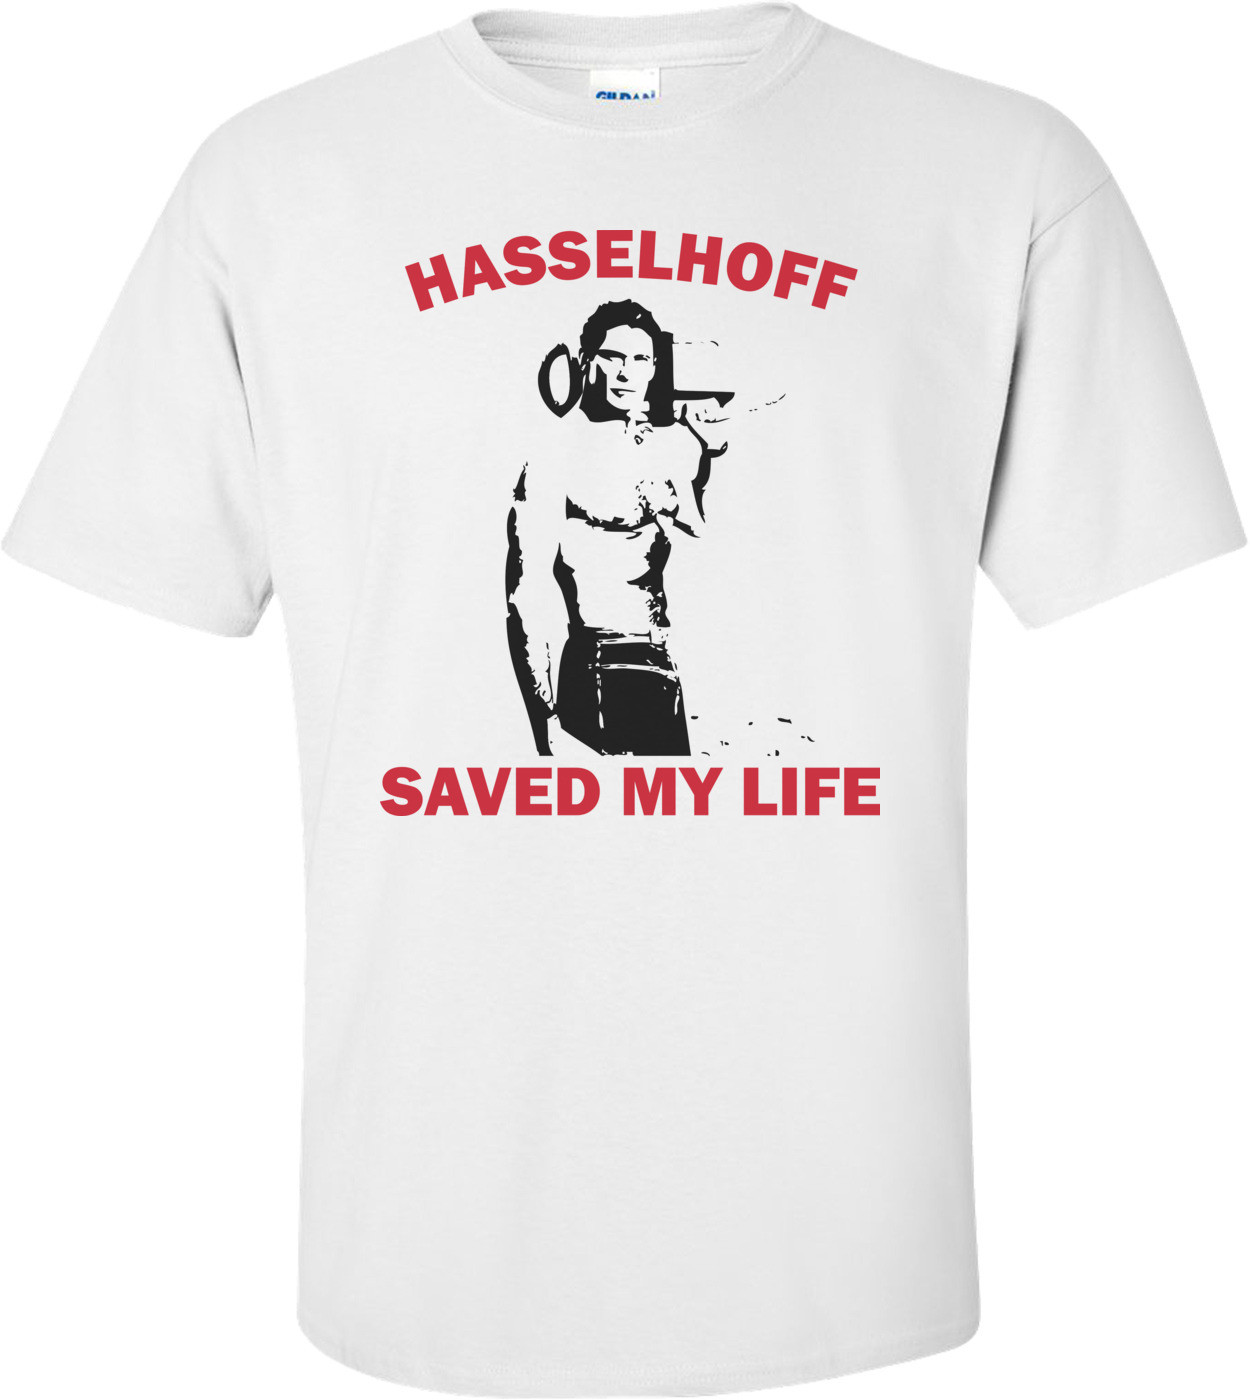 Hasselhoff Saved My Life